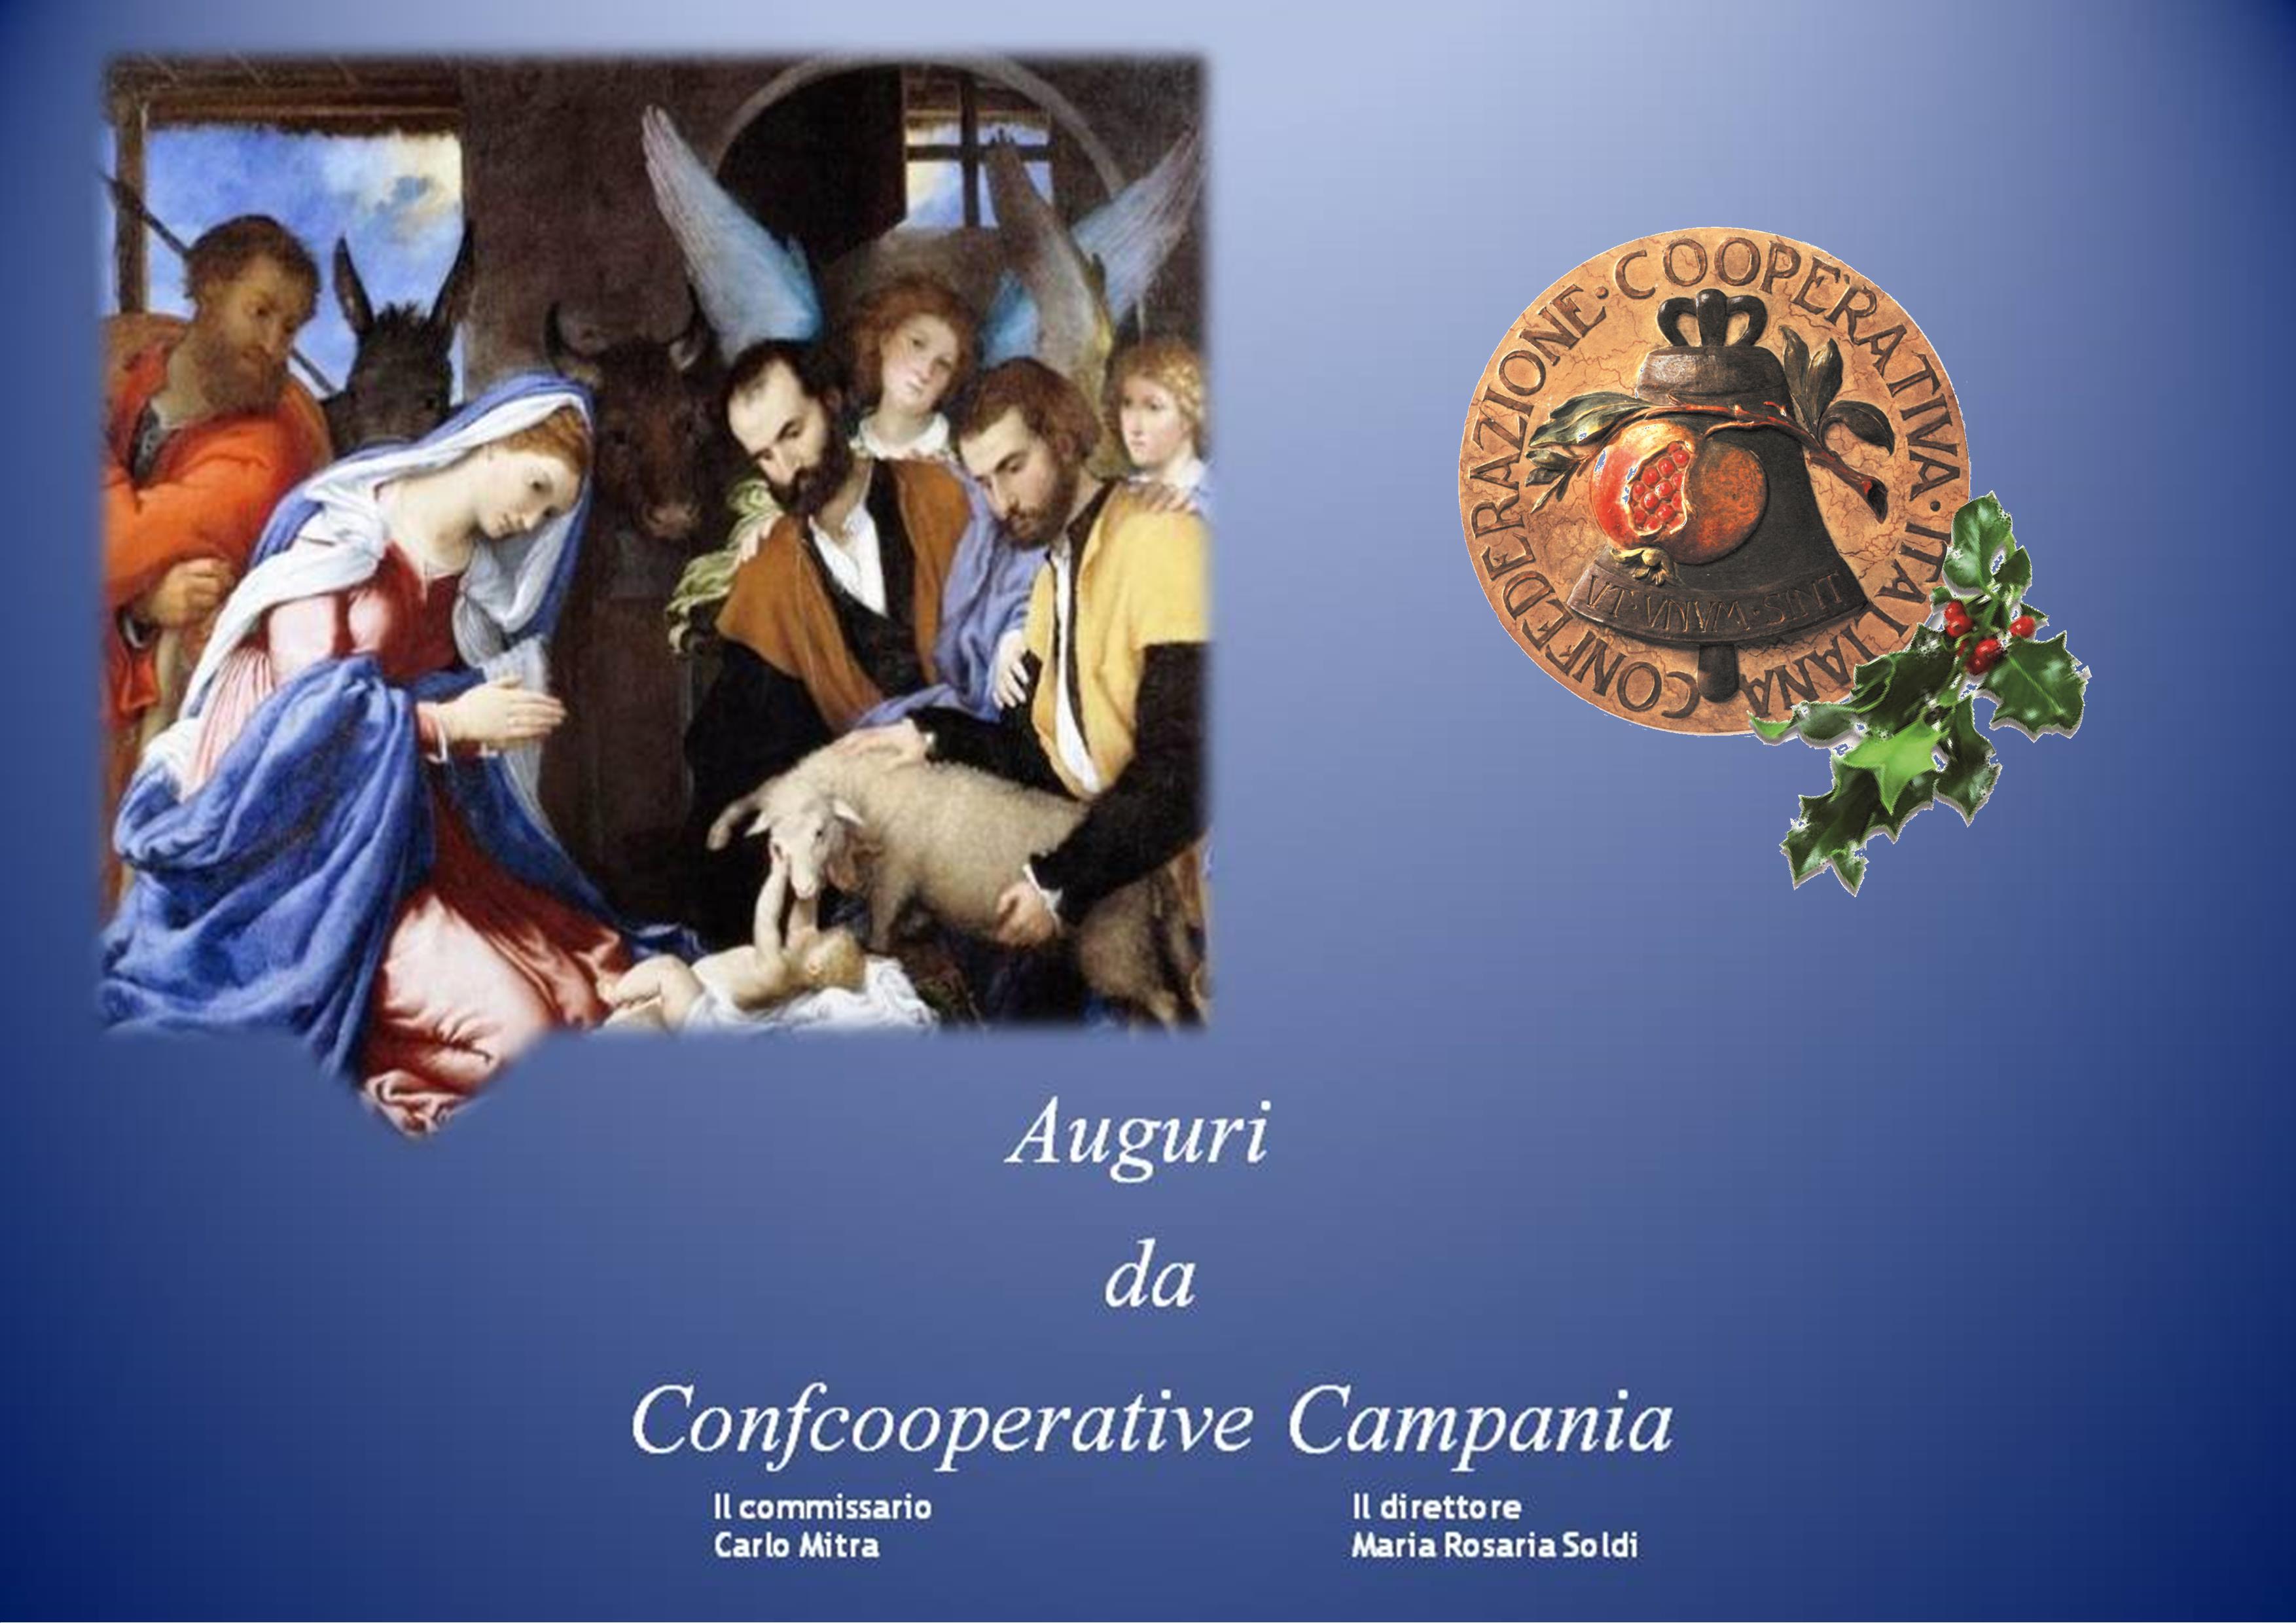 Natale 2013: Auguri da Confcooperative Campania